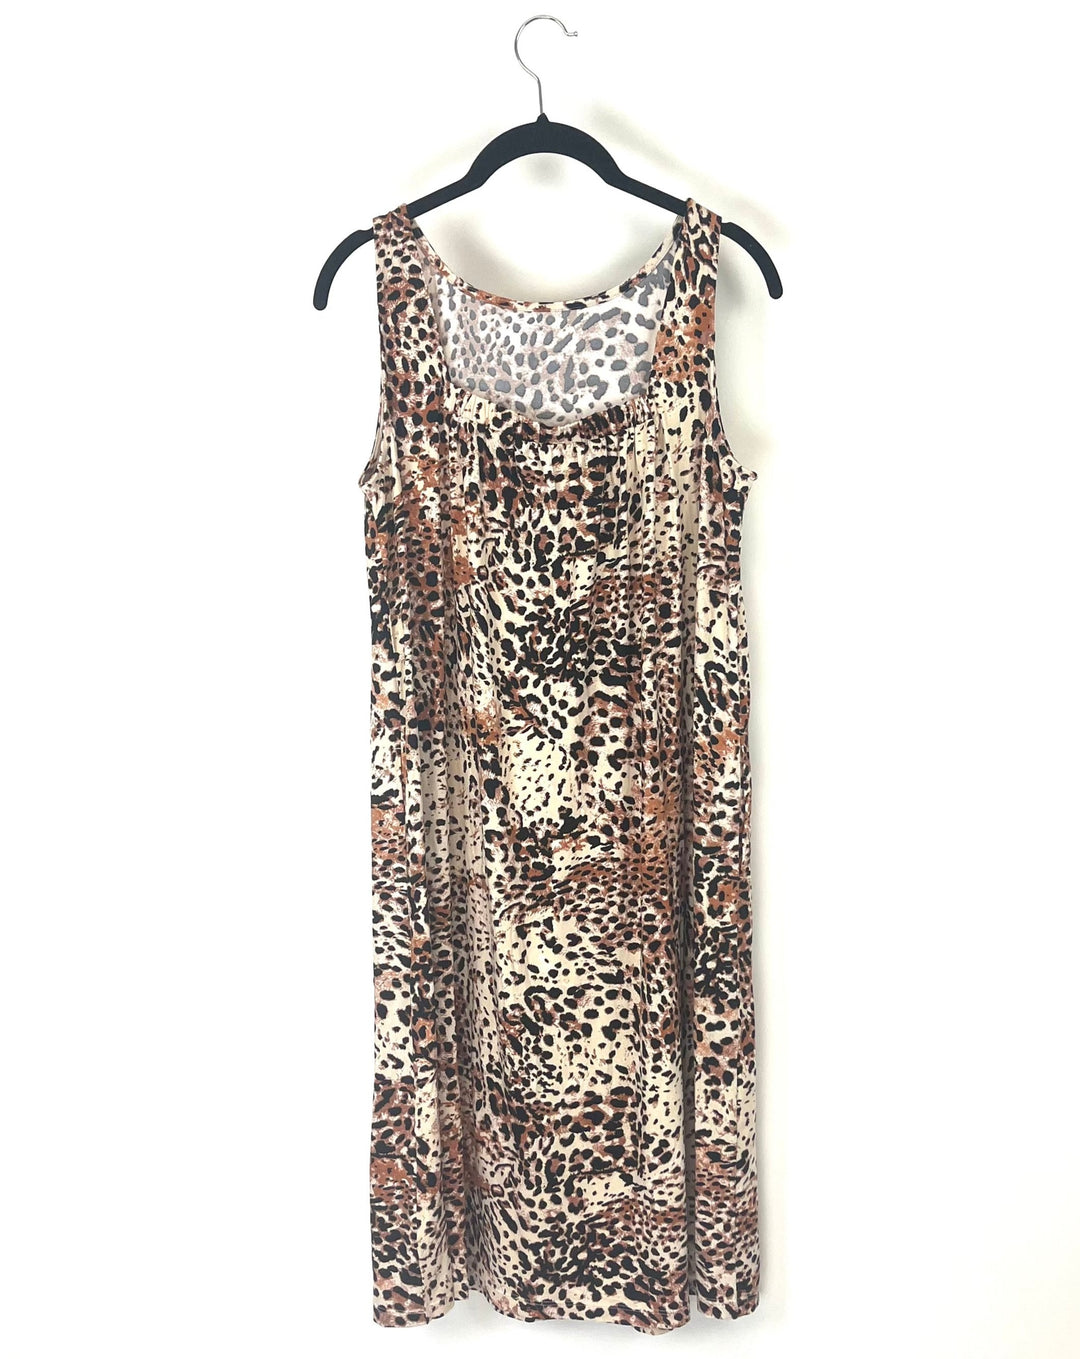 Soft Leopard Print Dress - Size 6/8